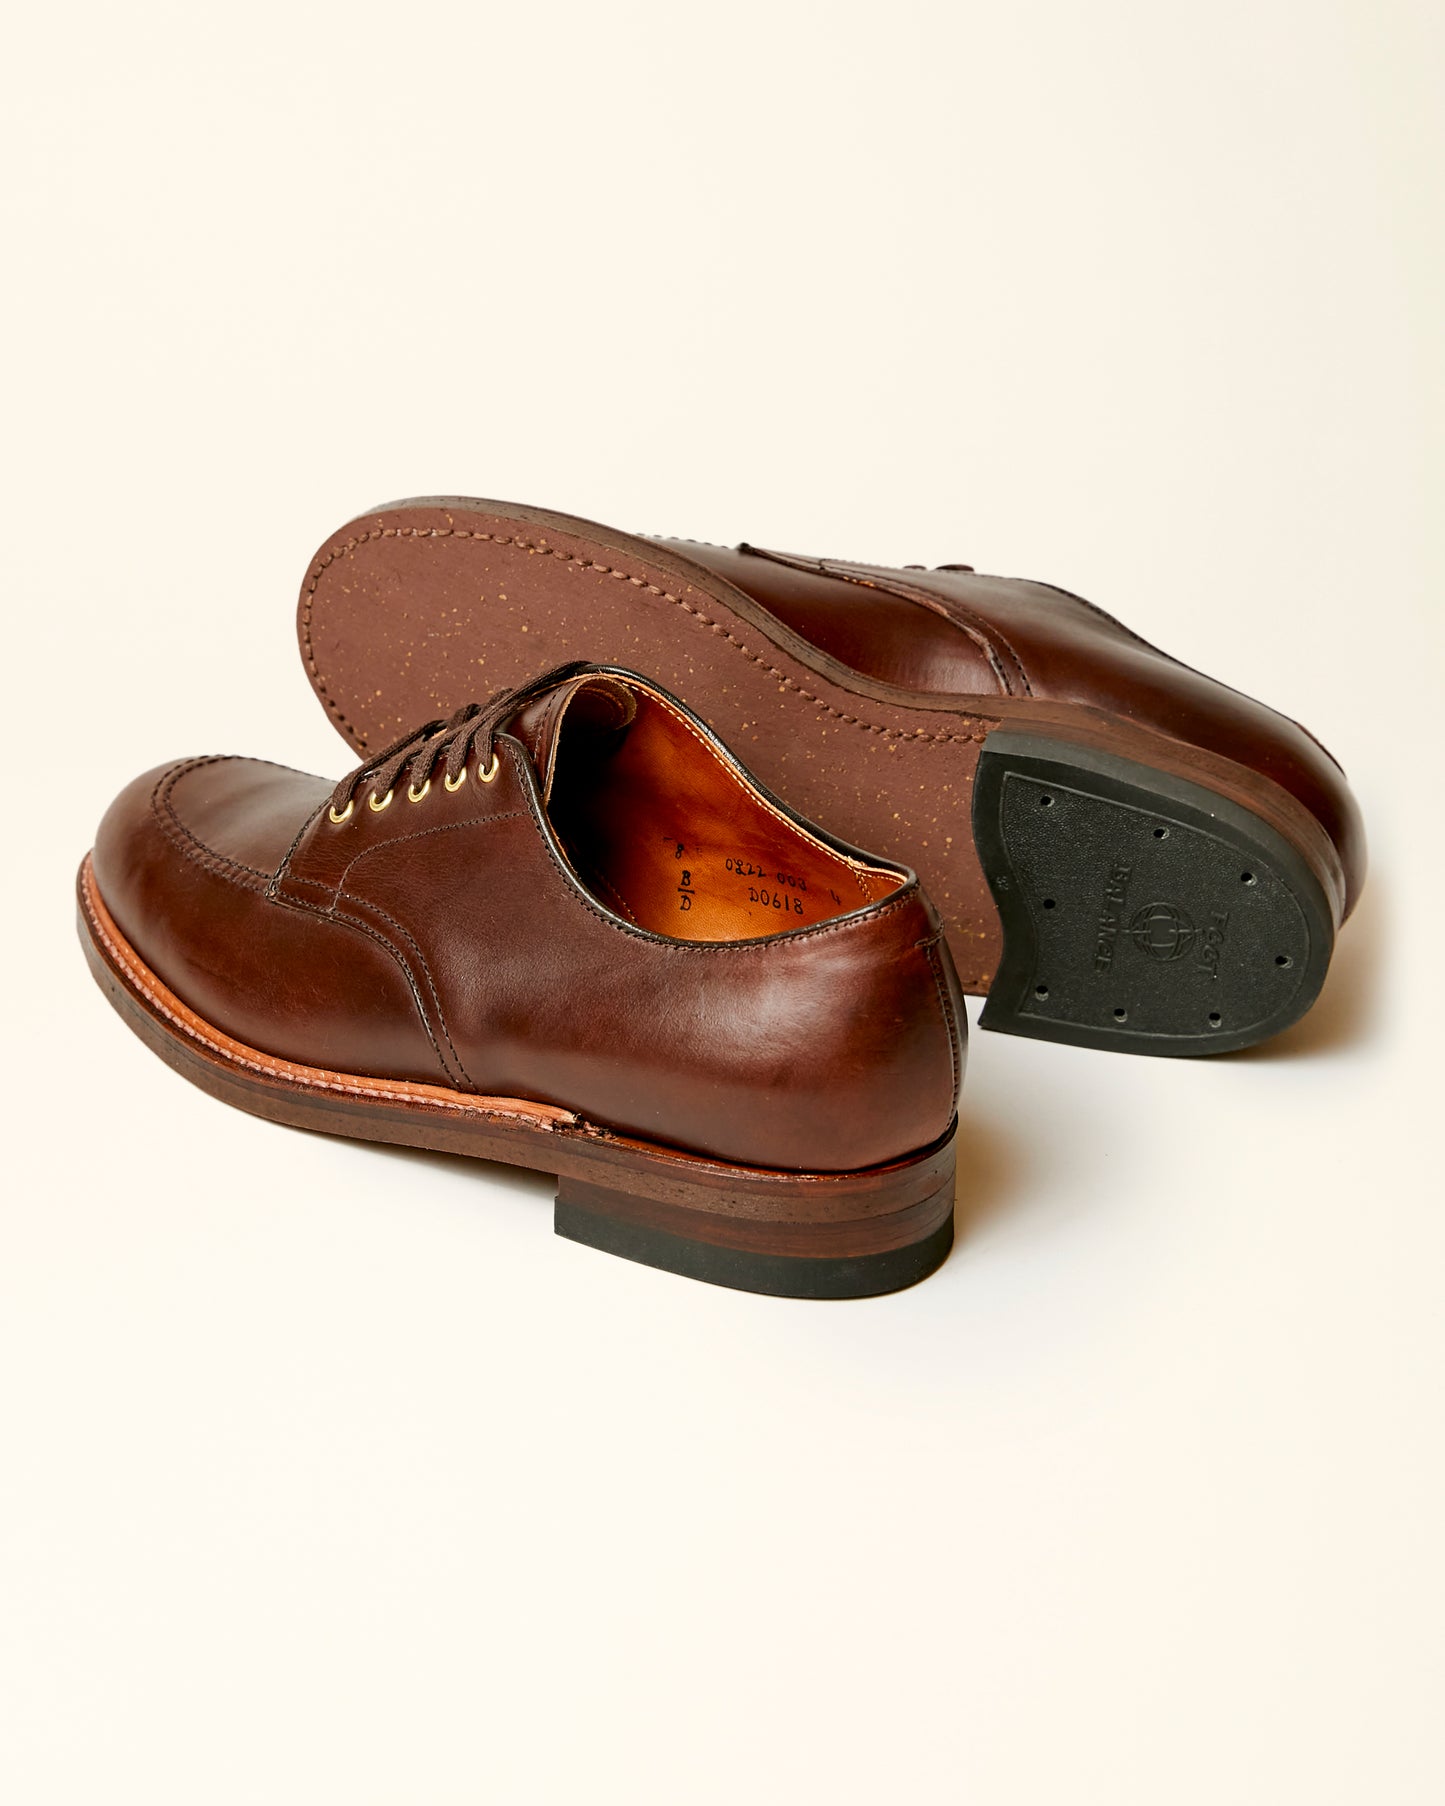 "Bainbridge" Indy Shoe in Brown Chromexcel, Trubalance Last